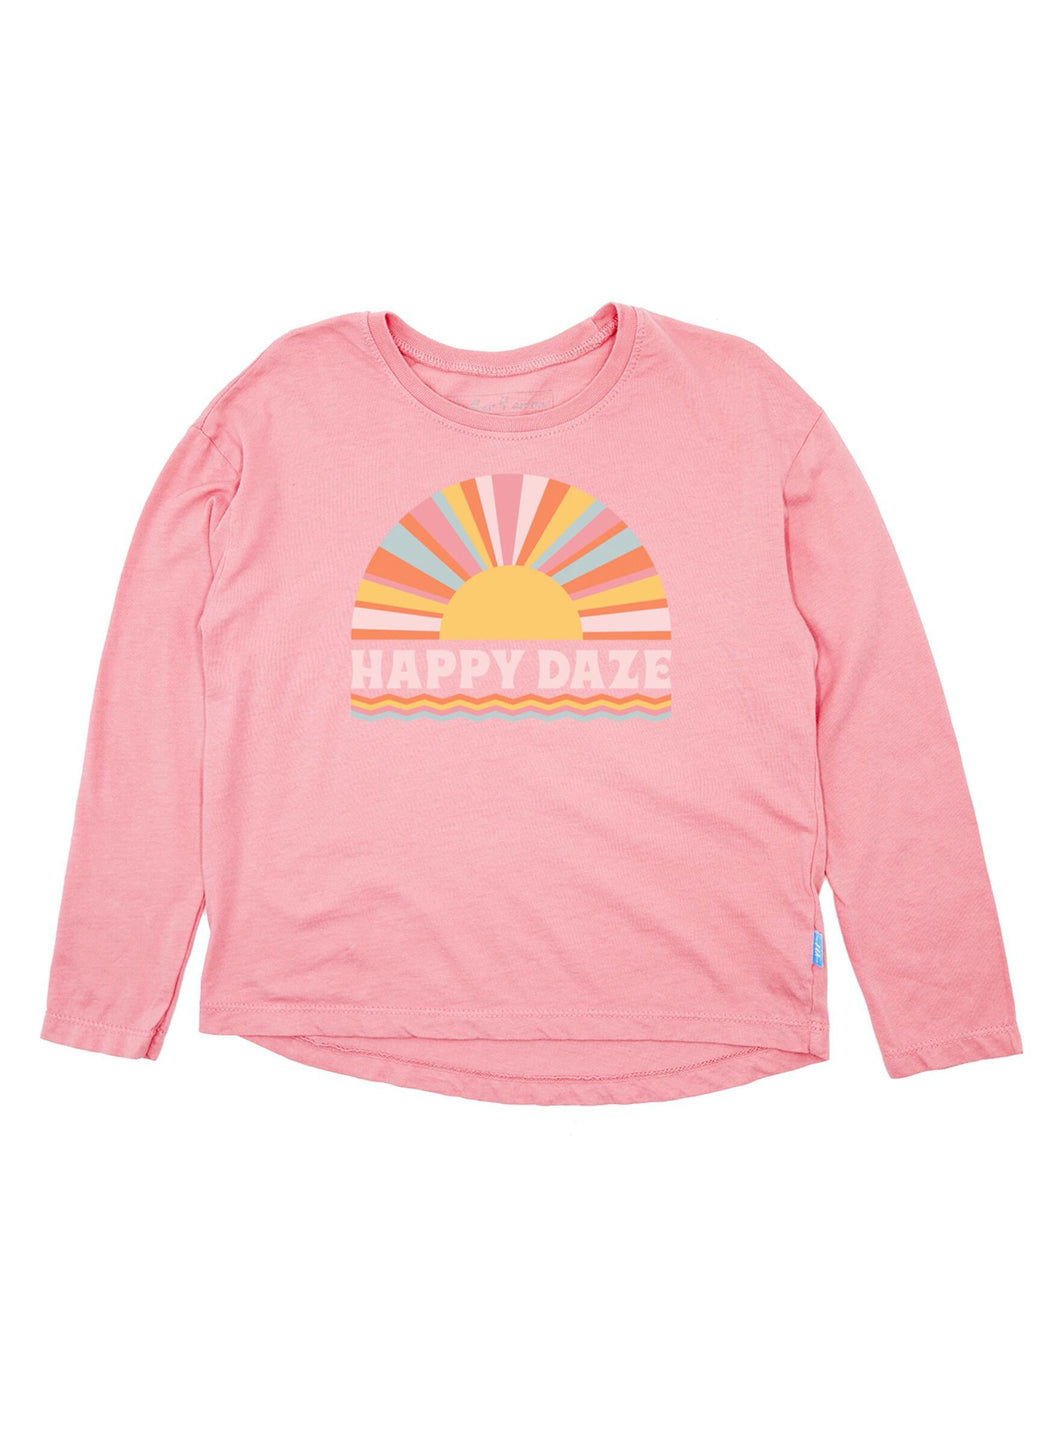 12mos, 4yrs, 12yrs - Happy Daze Long Sleeve Raglan Shirt in Quartz Pink